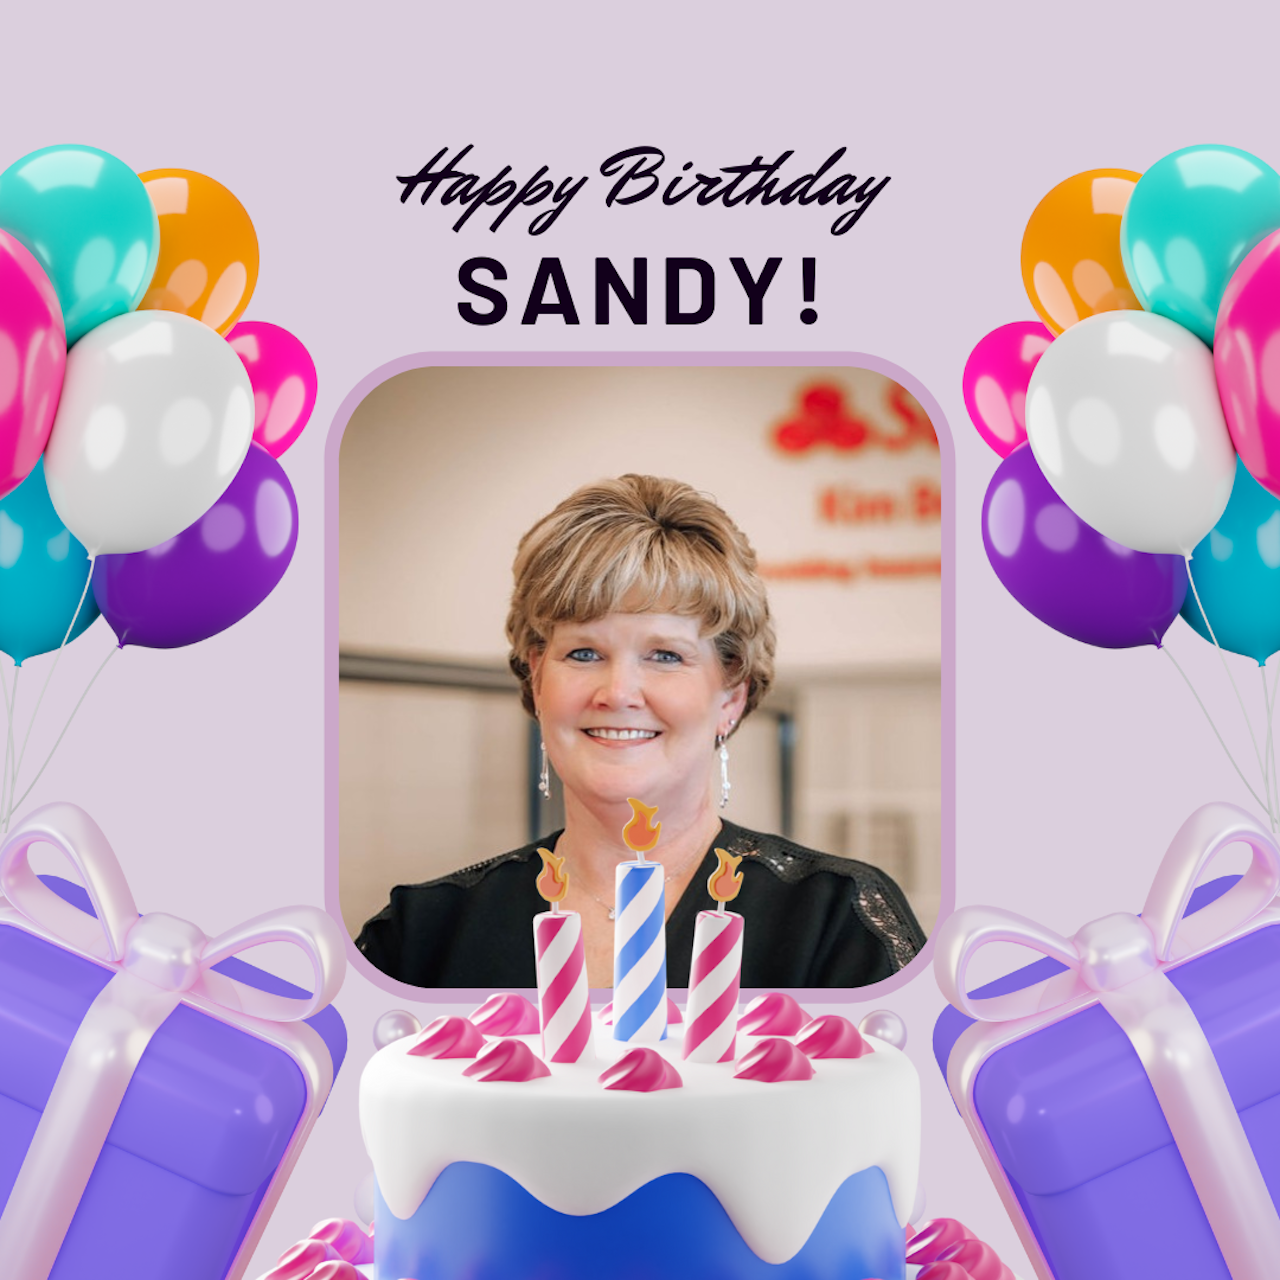 Happy birthday, Sandy! Kim Benton - State Farm Insurance Agent Millsboro (302)934-9393